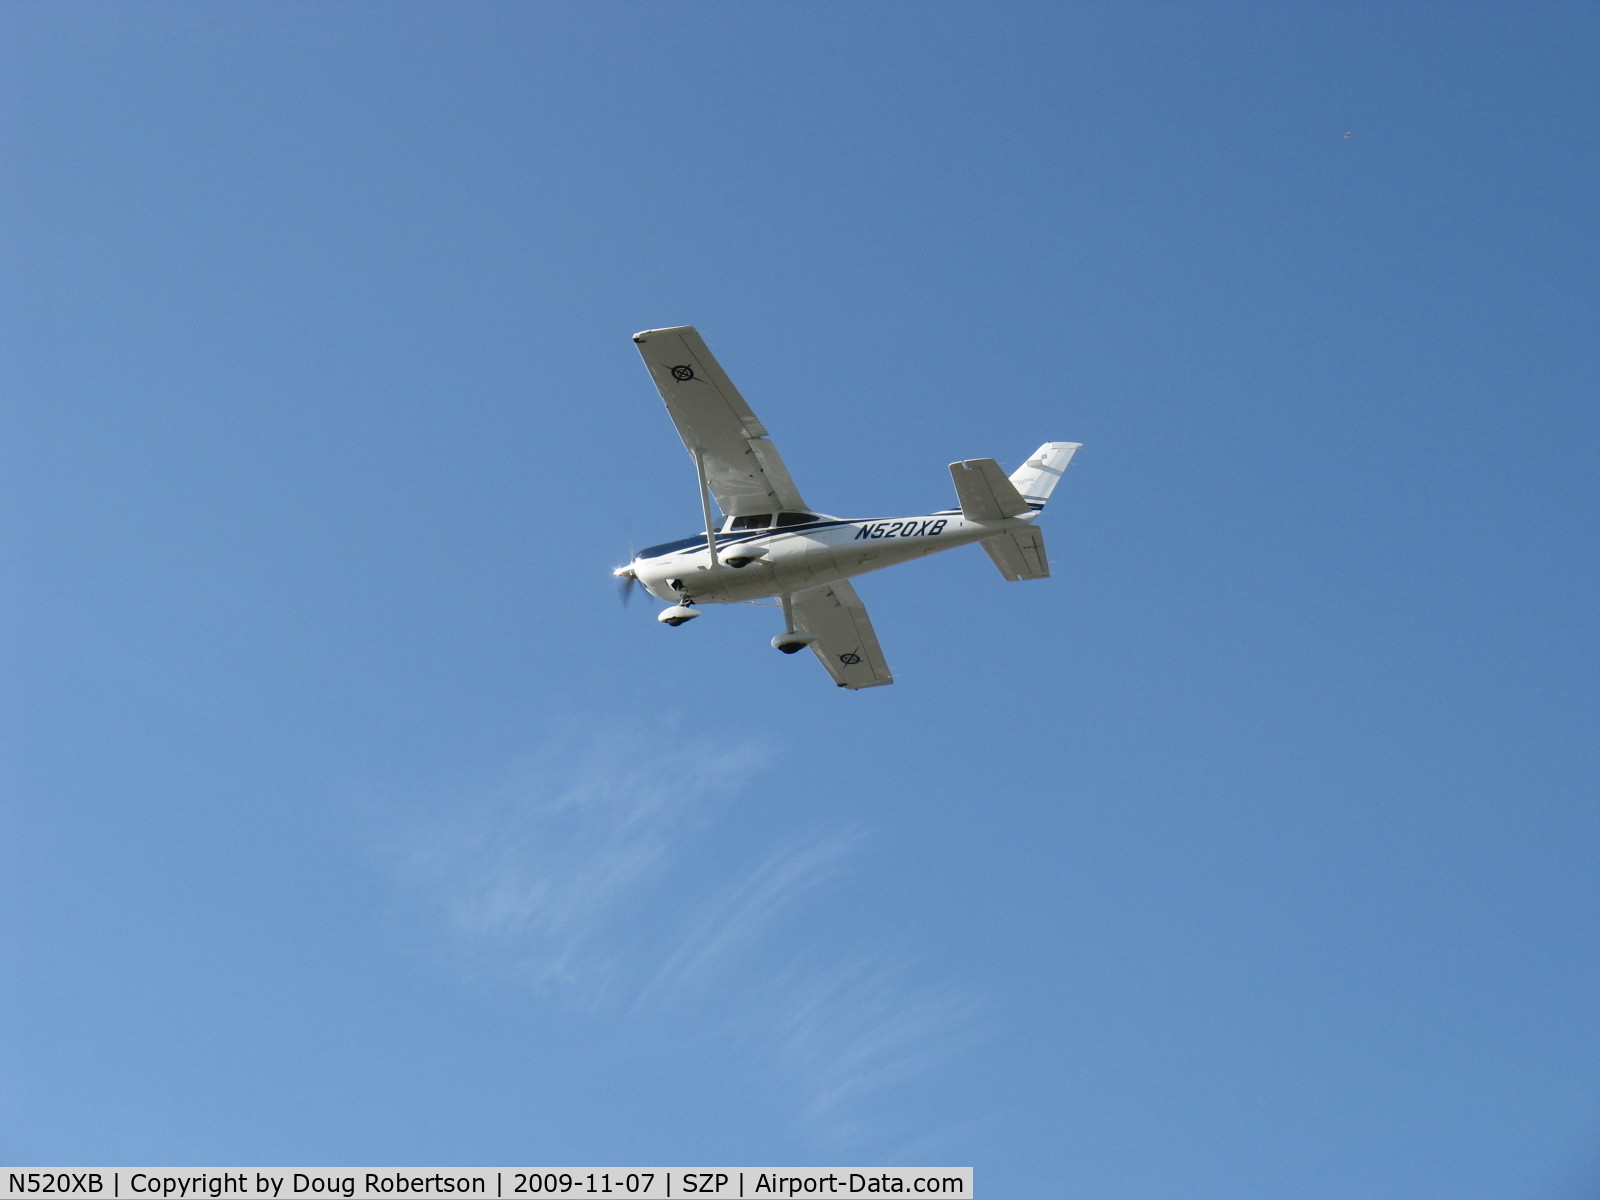 N520XB, 2006 Cessna T182T Turbo Skylane C/N T18208507, 2006 Cessna T182T Turbo SKYLANE, Lycoming TIO-540-AK1A 235 Hp, McCauley 3 blade CS prop, takeoff climb #2 Rwy 22